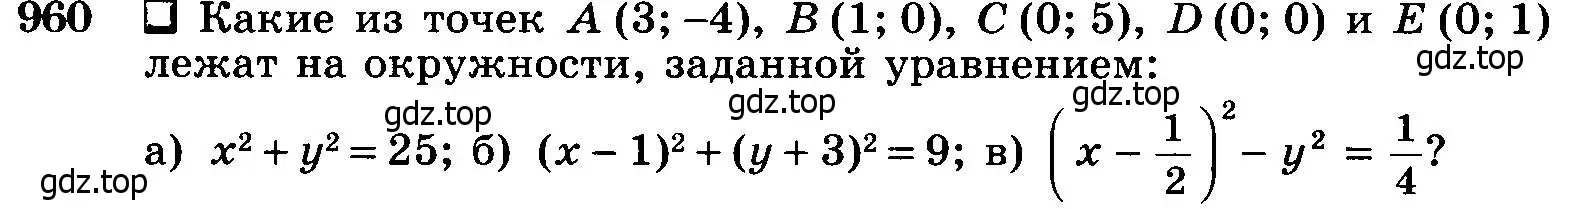 Условие номер 960 (страница 240) гдз по геометрии 7-9 класс Атанасян, Бутузов, учебник